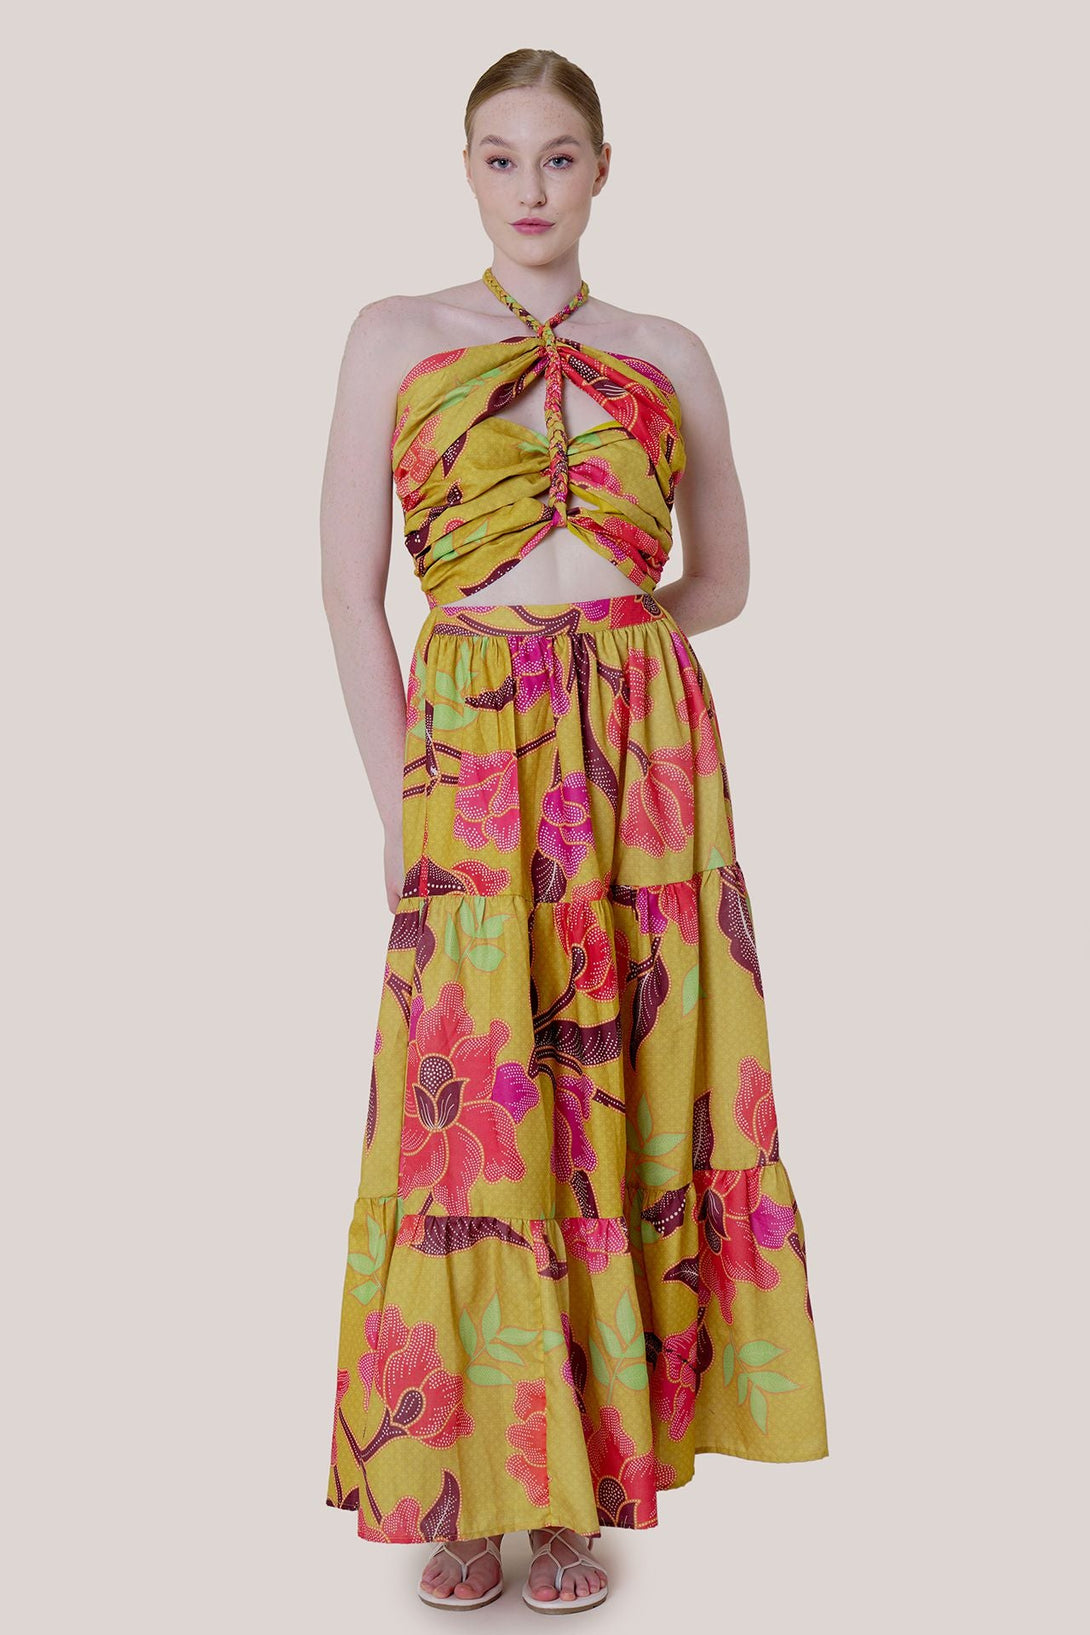 "off shoulder maxi" "maxi dress yellow floral" "floor length dress" "long side cut out dress"